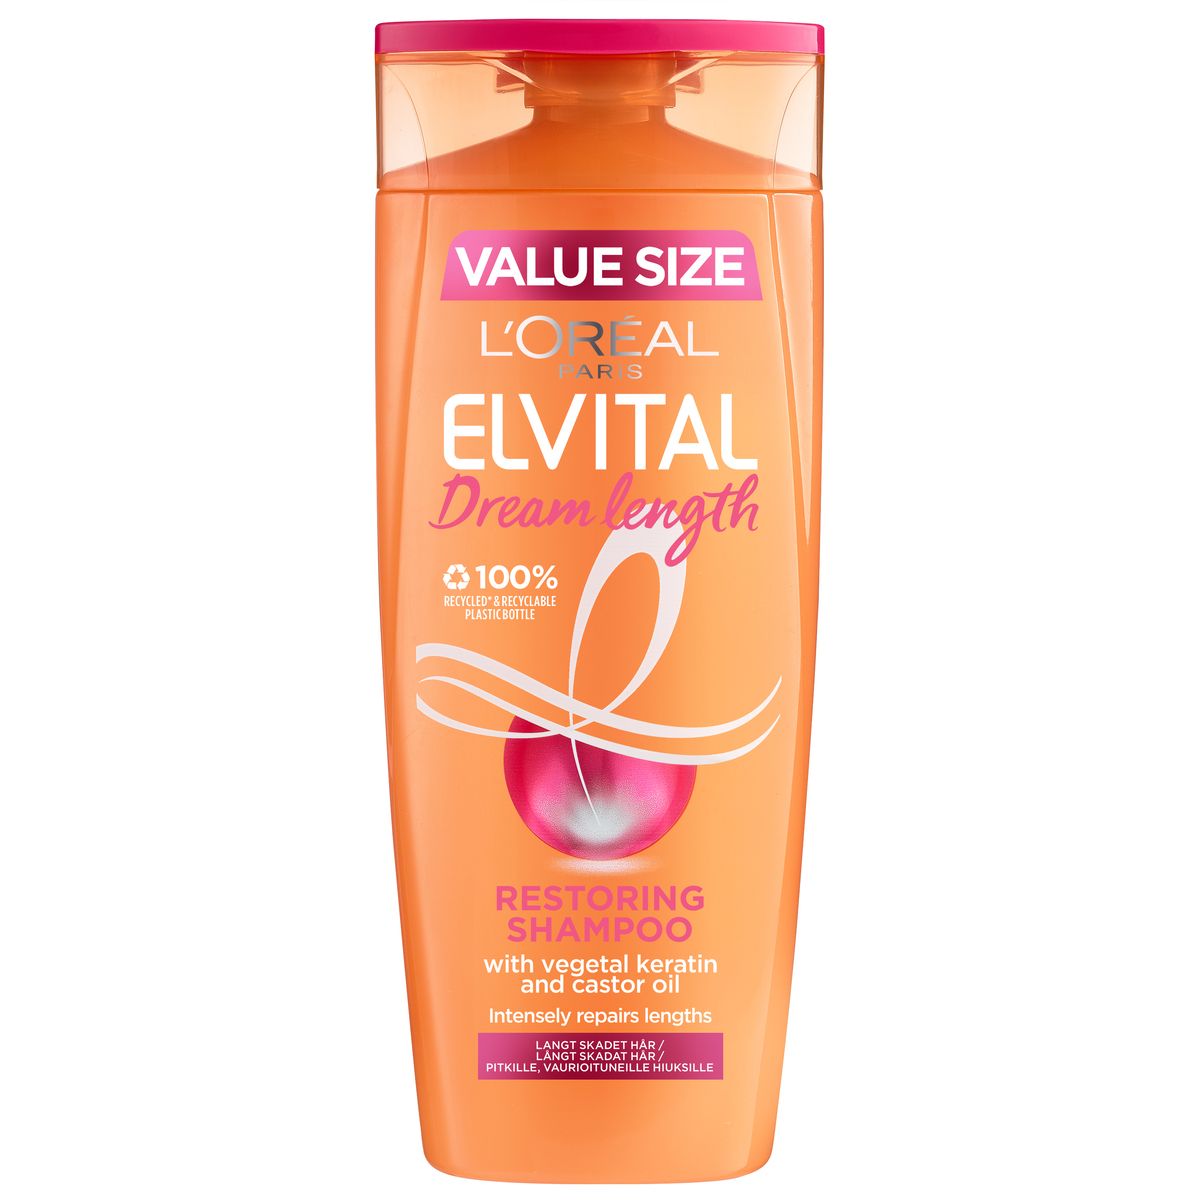 Bevise Akvarium Utrolig Køb L'Oréal Elvital Dream Length Shampoo 400 ml hos Med24.dk